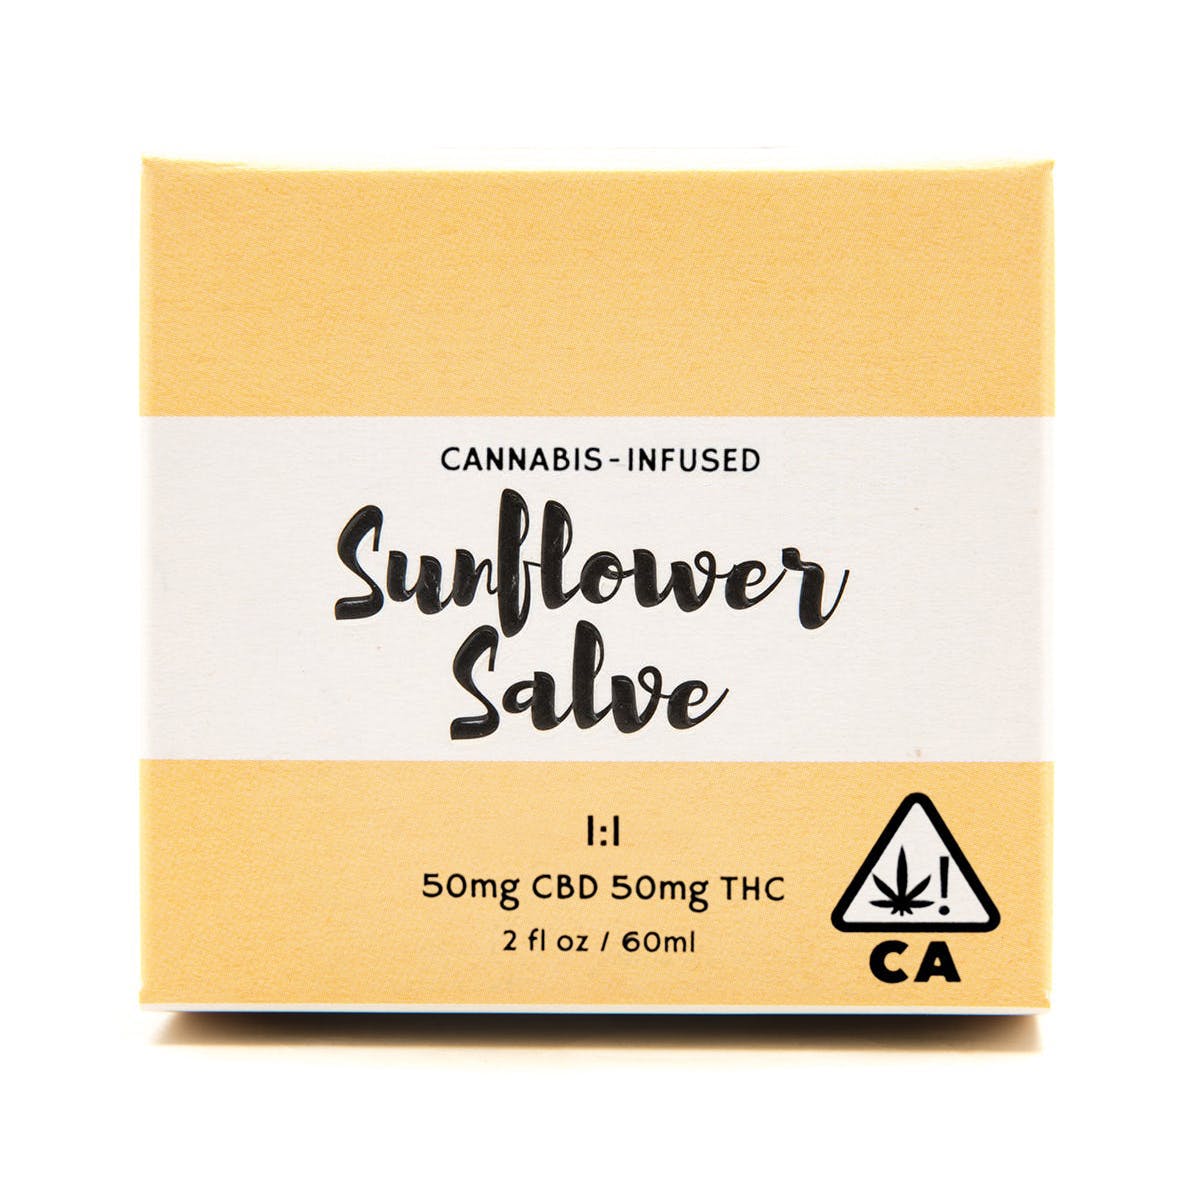 marijuana-dispensaries-calhemp-wellness-center-in-inglewood-cannabis-infused-sunflower-salve-11